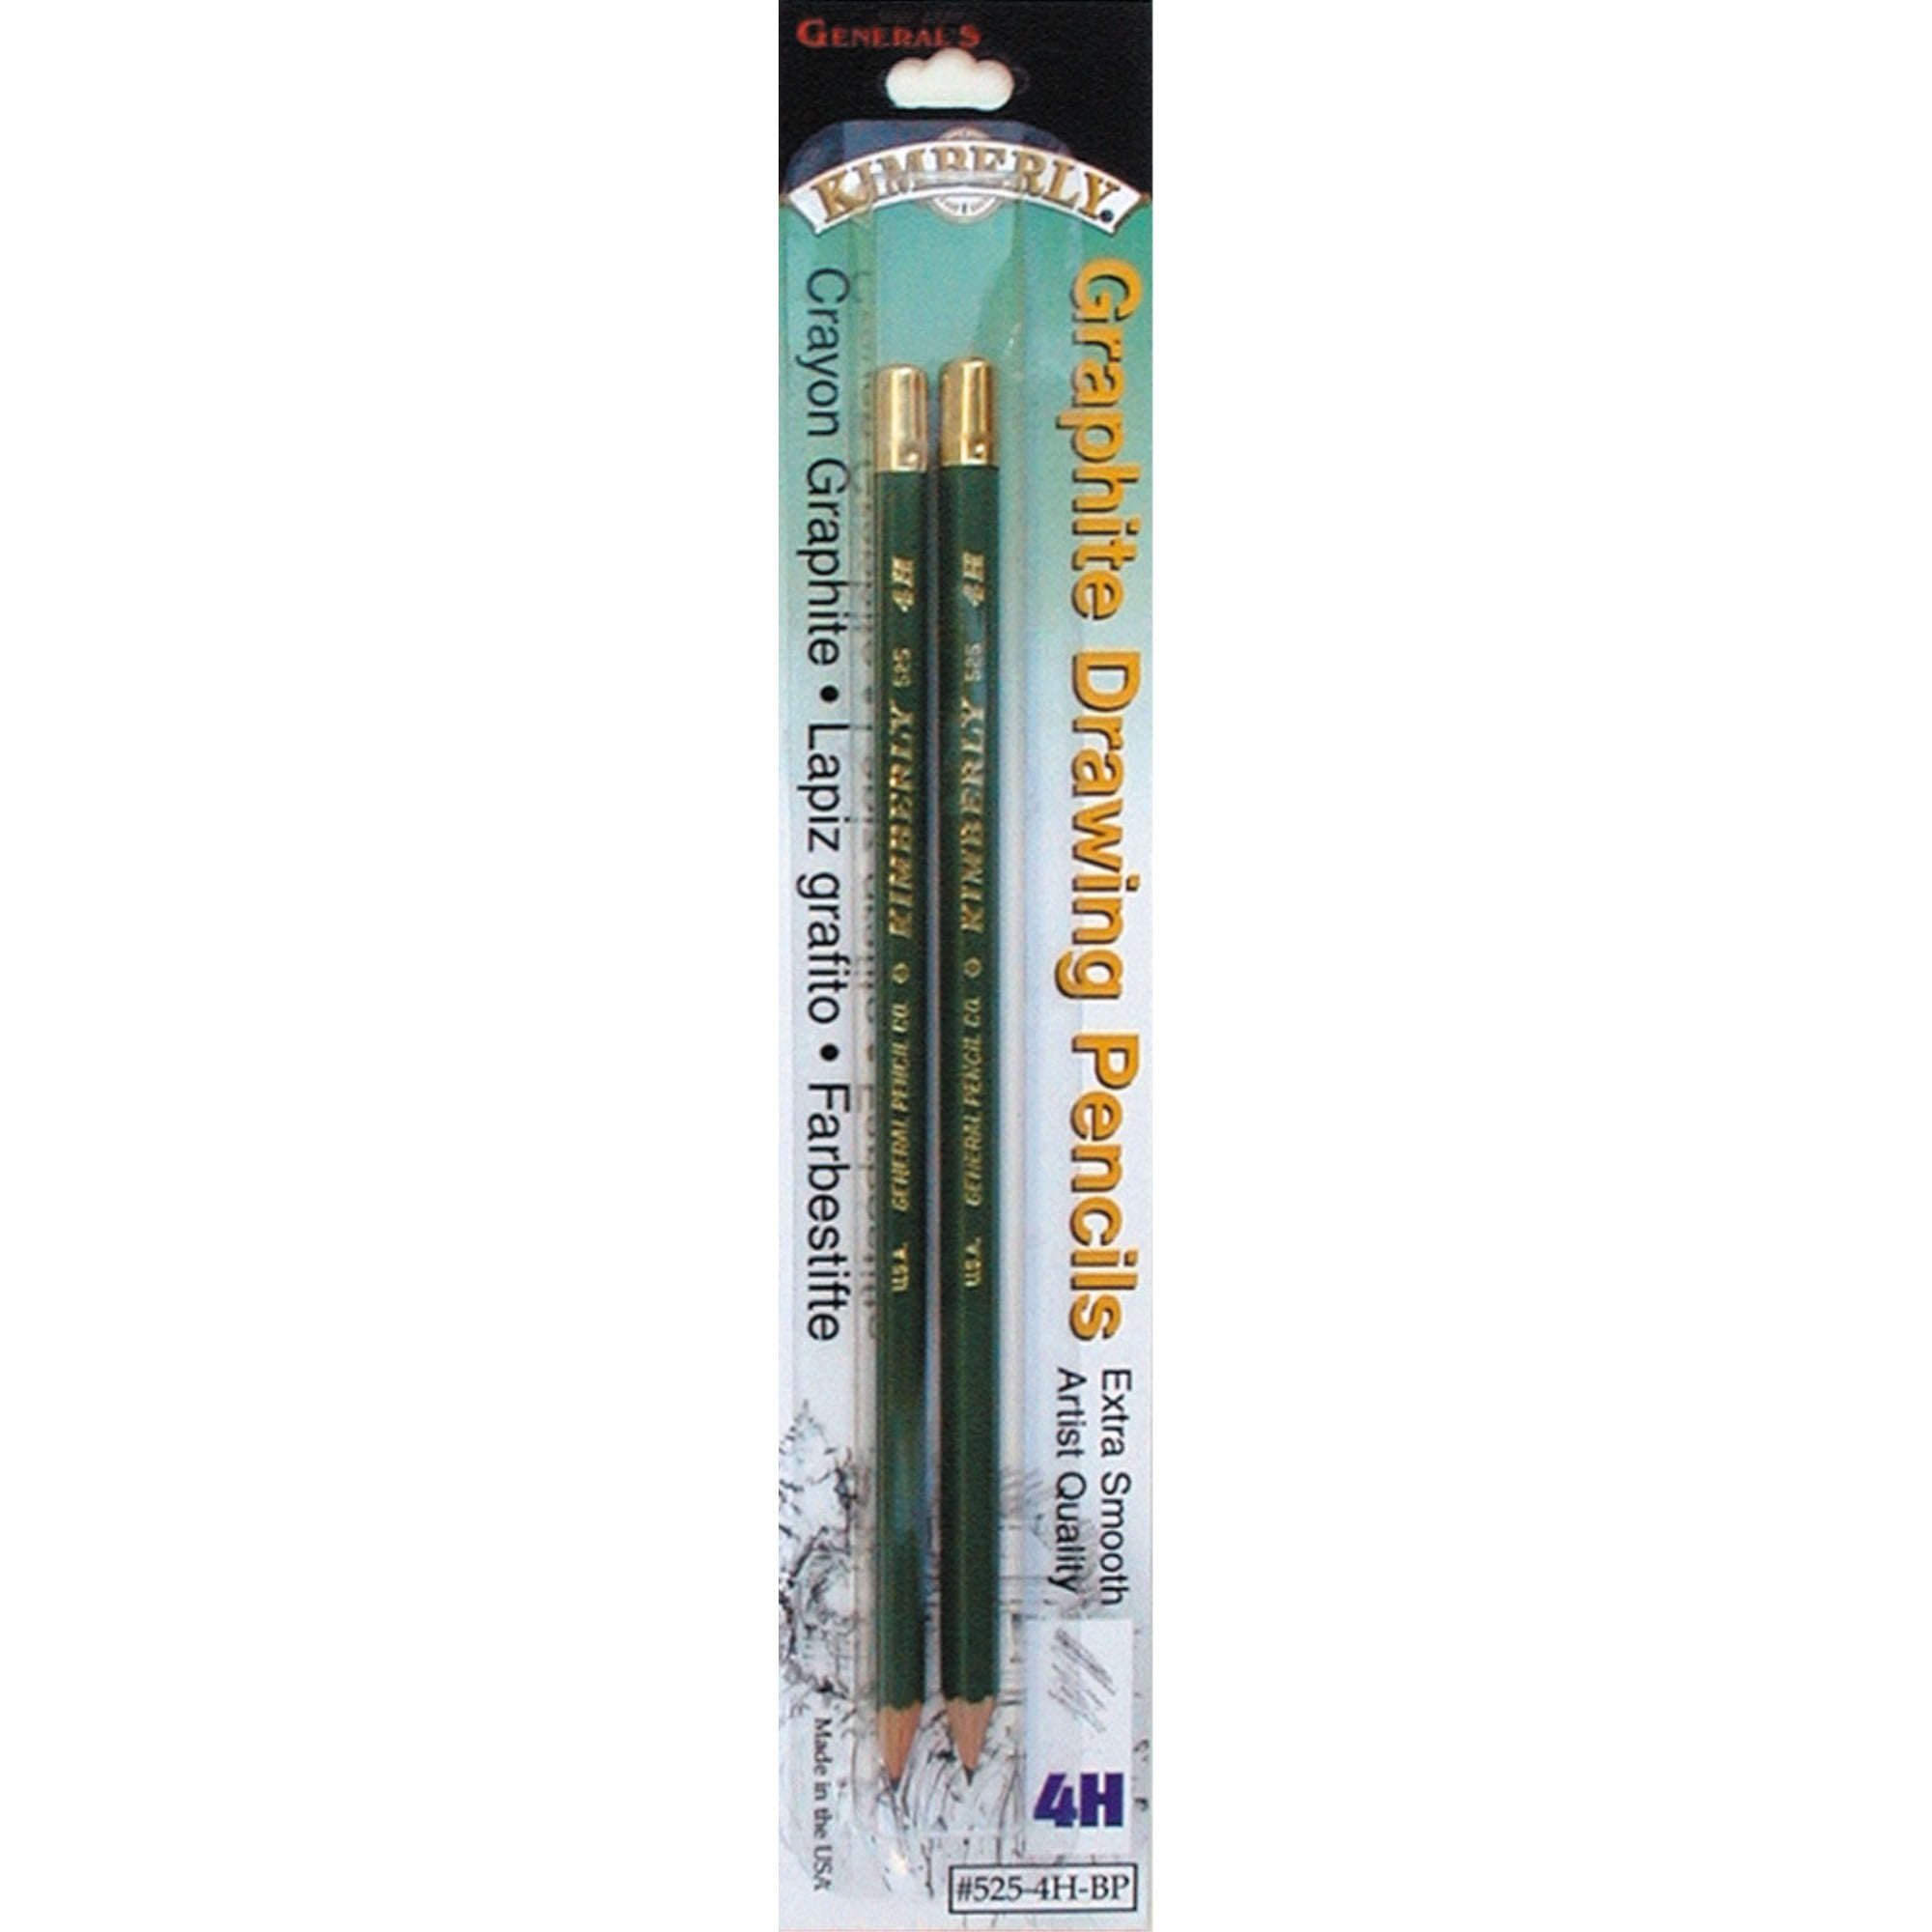 General Pencil 406765 Sax Solid Drawing Pencil, 4H Tip, Black - Pack of 12,  12 - Gerbes Super Markets